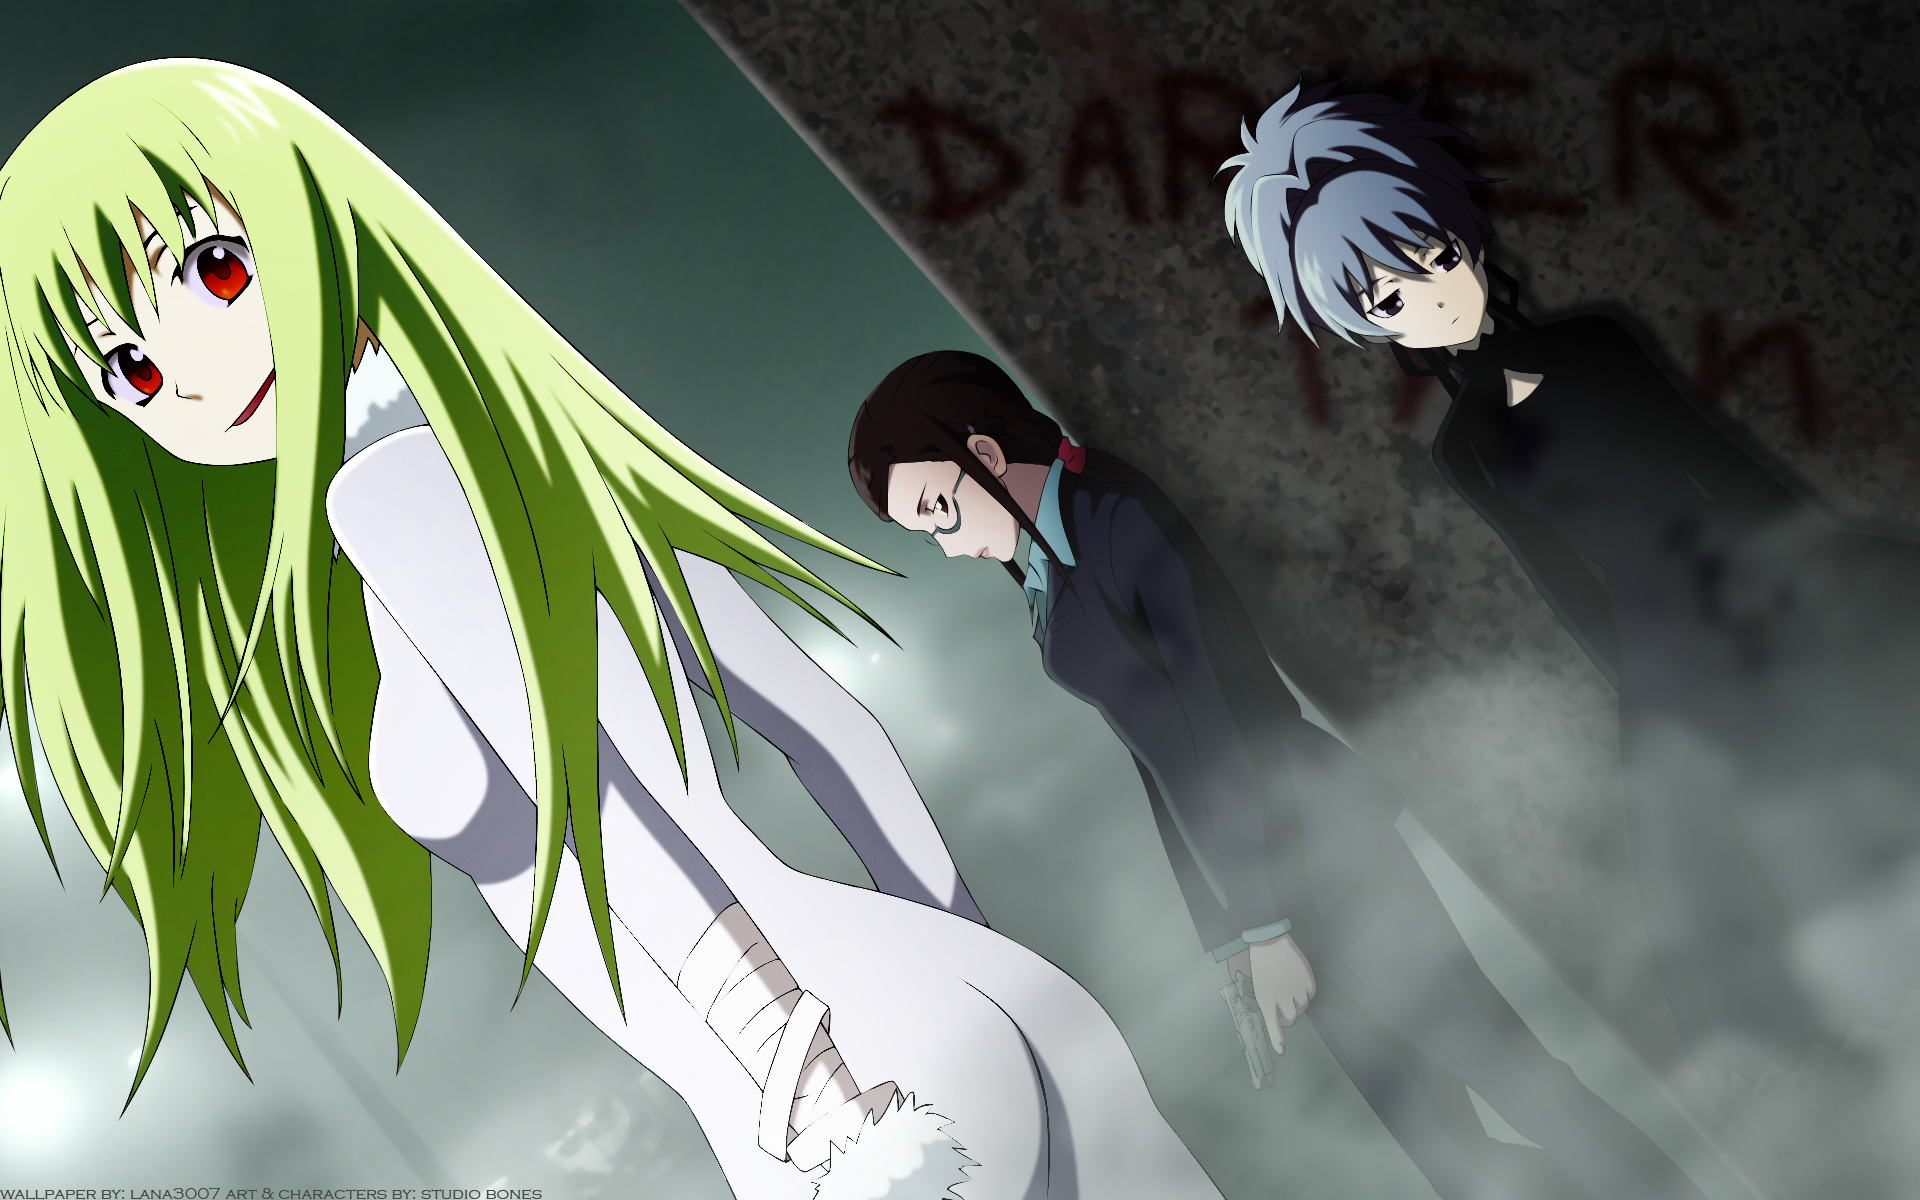 Anime characters Amber, Misaki Kirihara, and Yin from Darker than Black in a captivating desktop wallpaper.